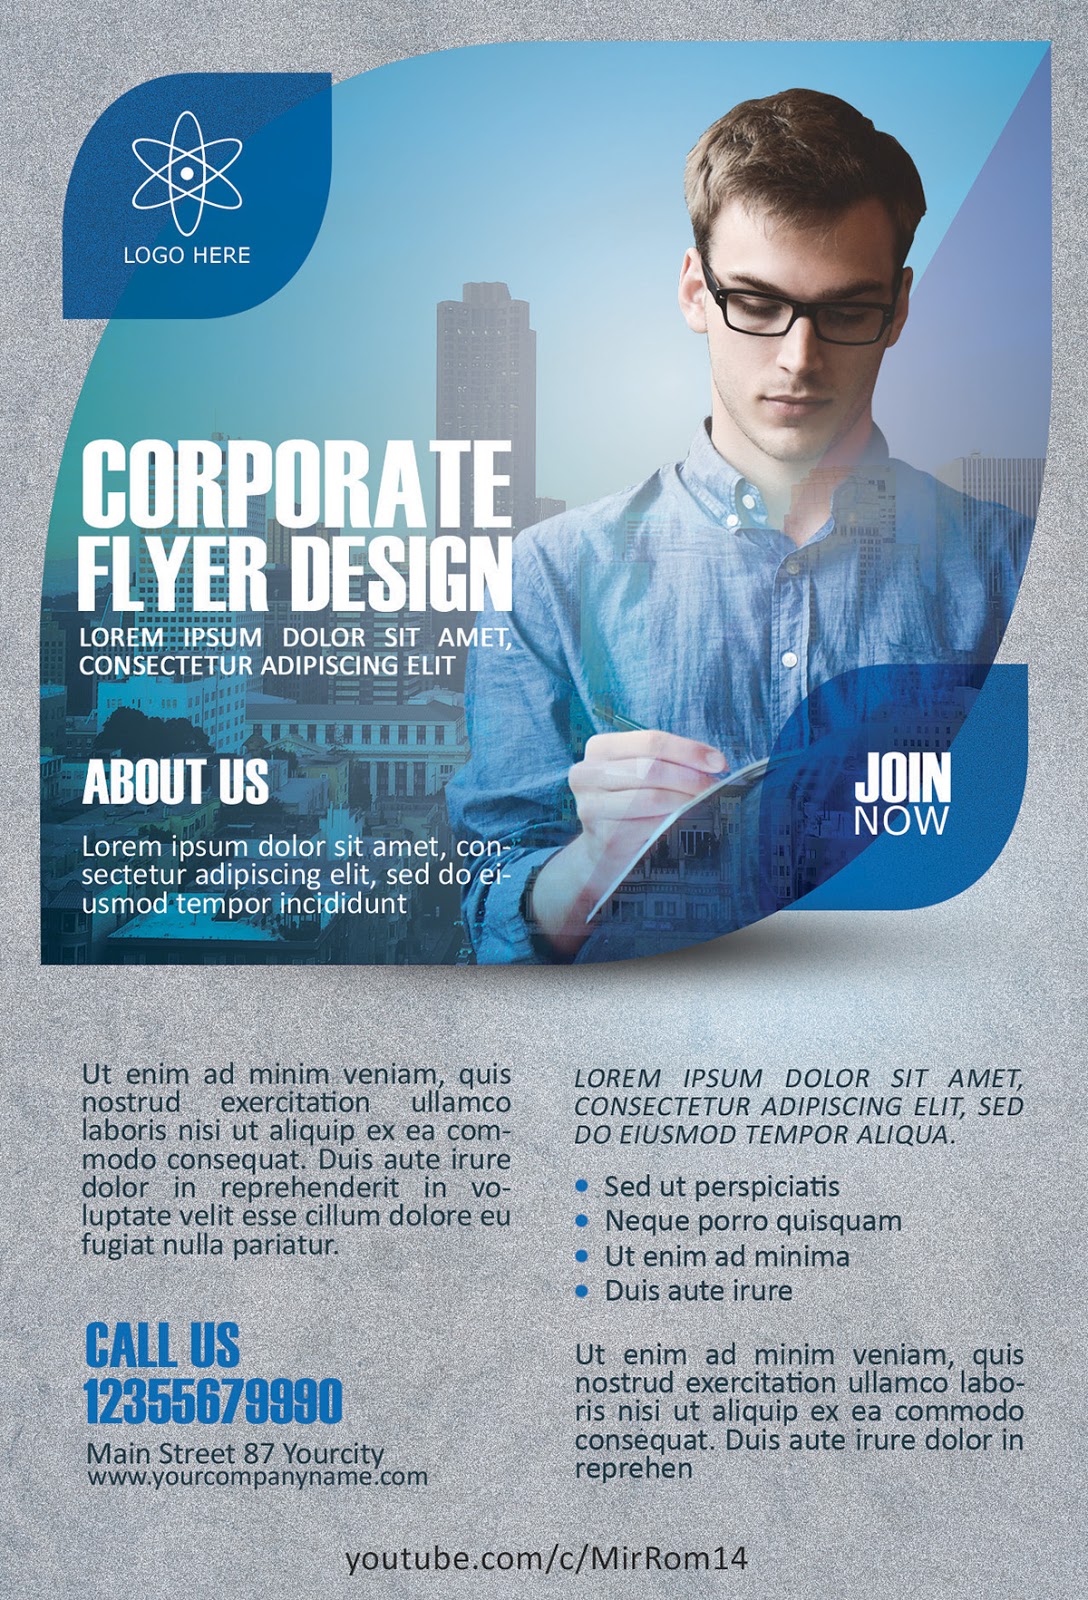 Print Design - Corporate Flyer Photoshop Tutorial